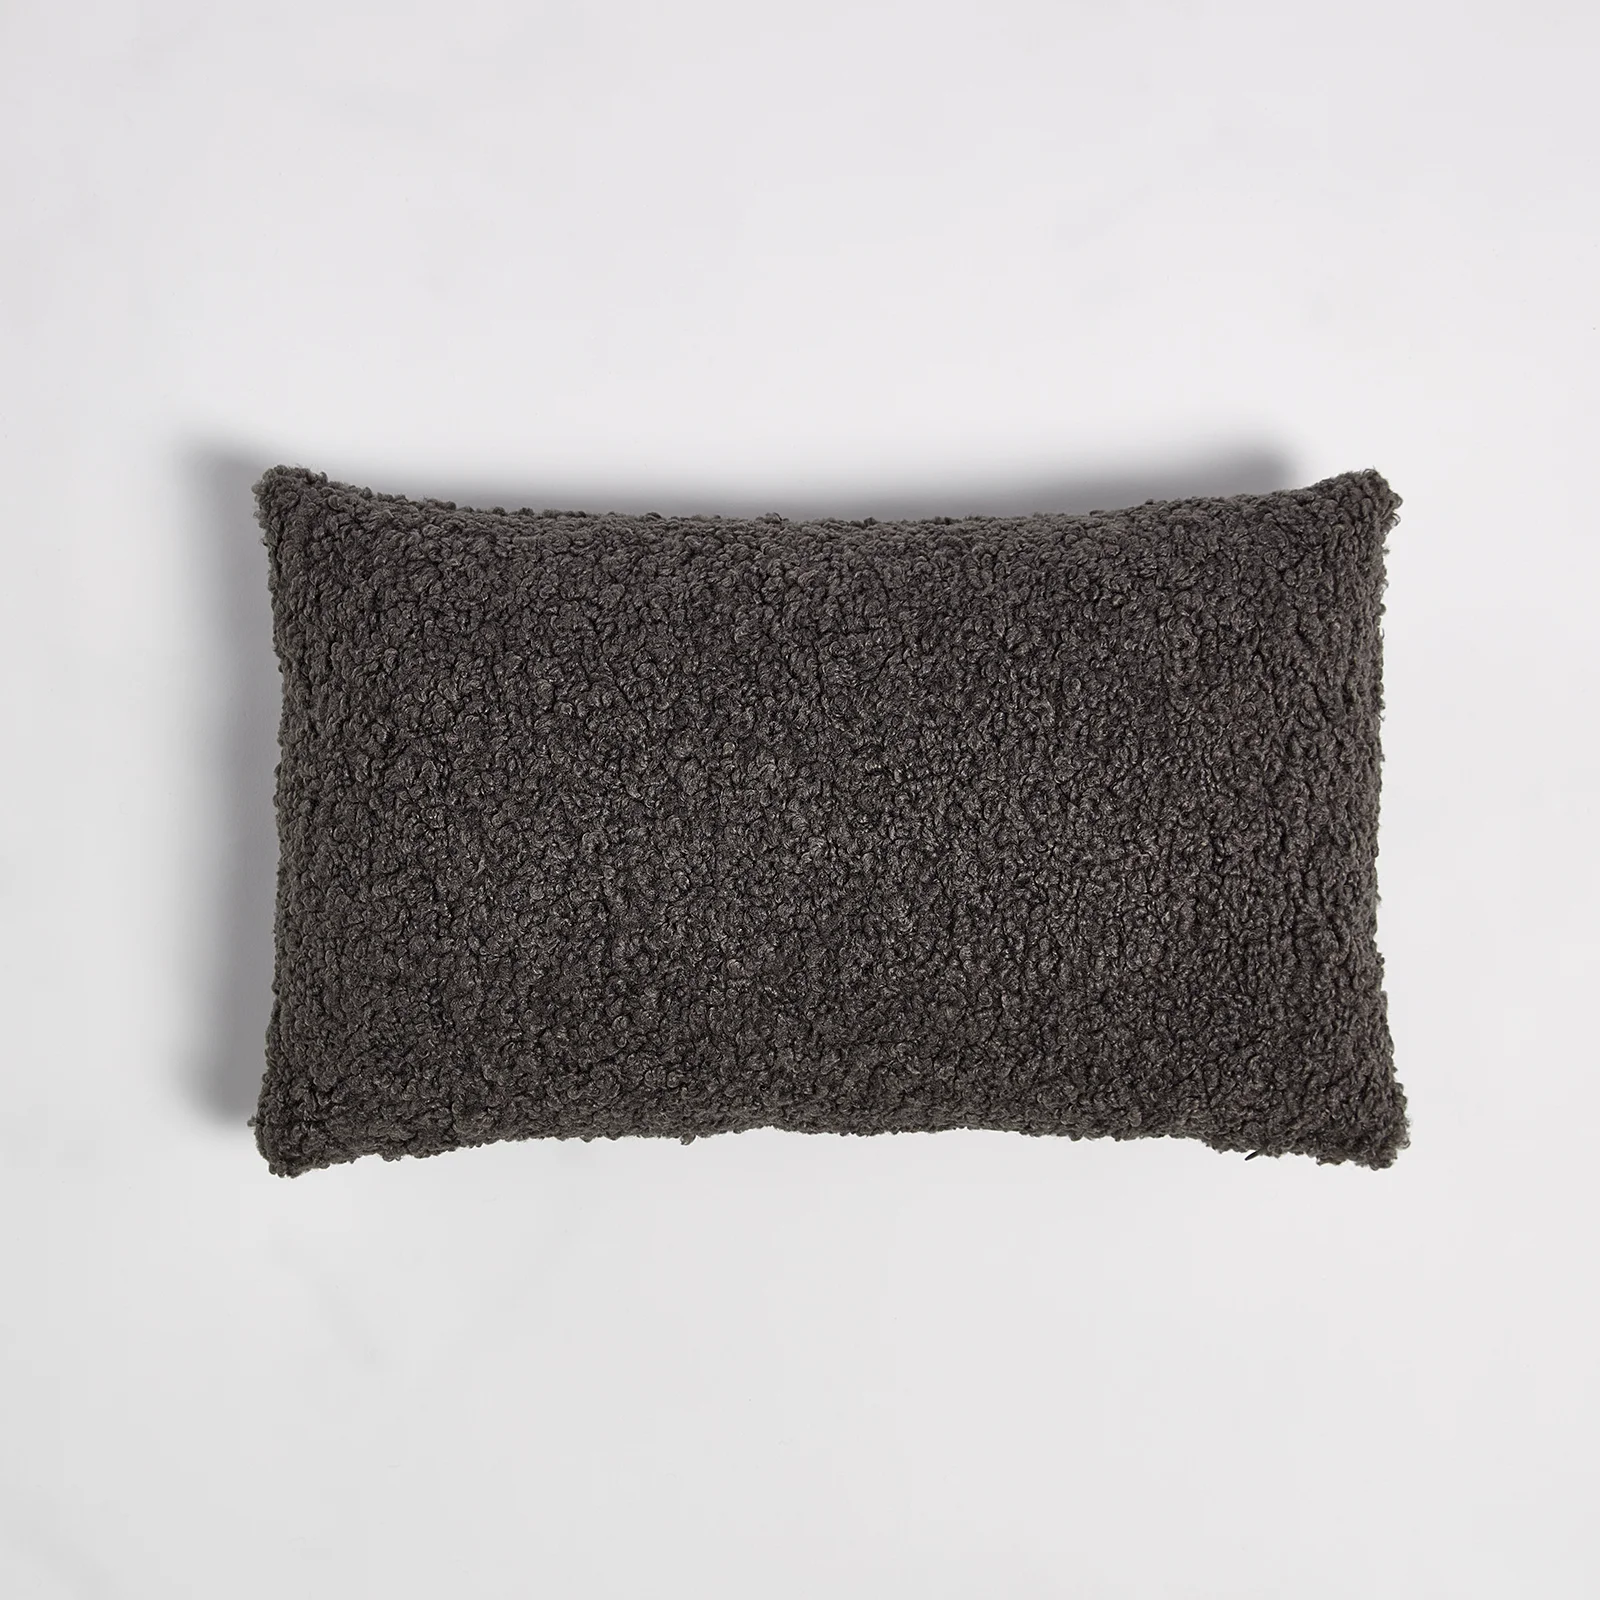 ïn home Faux Sheep Skin Cushion - Charcoal - 30x50cm Image 1